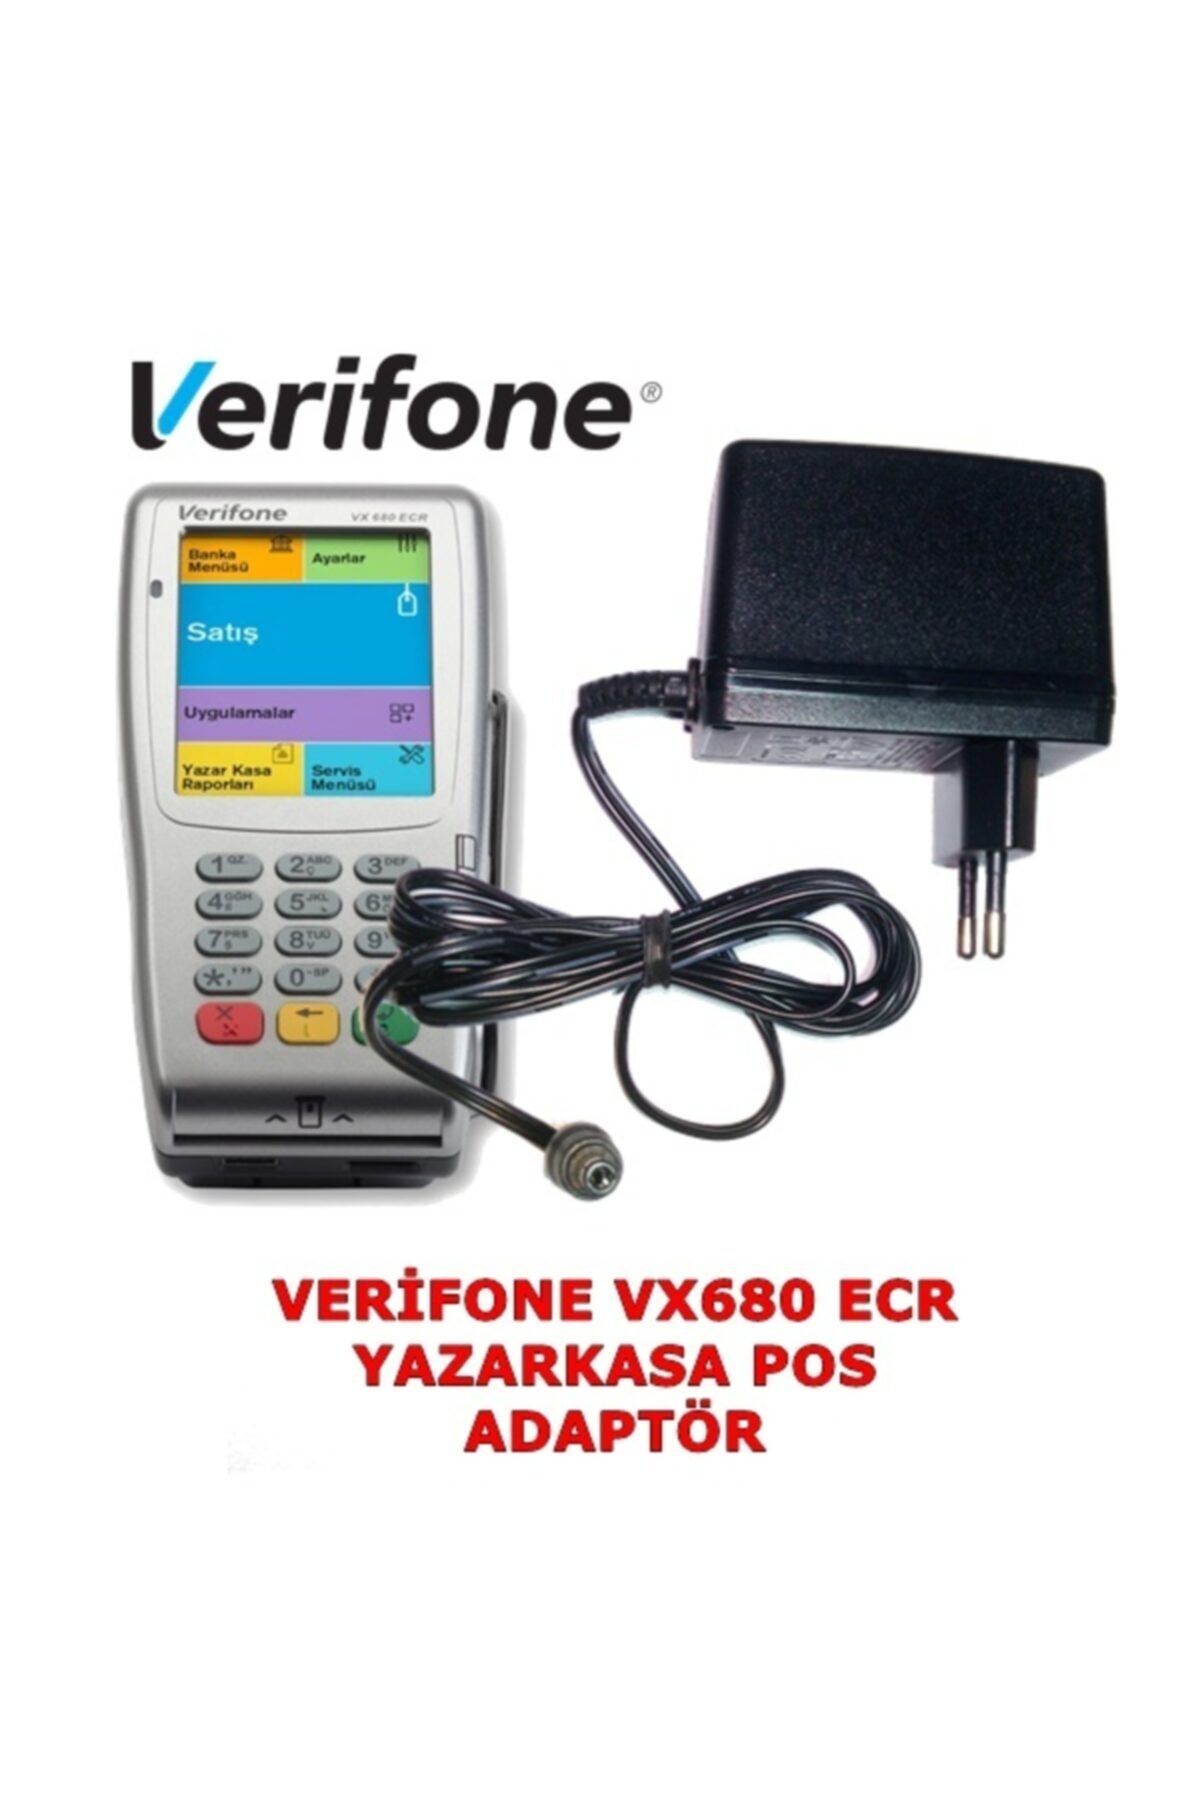 verifone Vx680 Ecr Yazar Kasa Pos Adaptörü